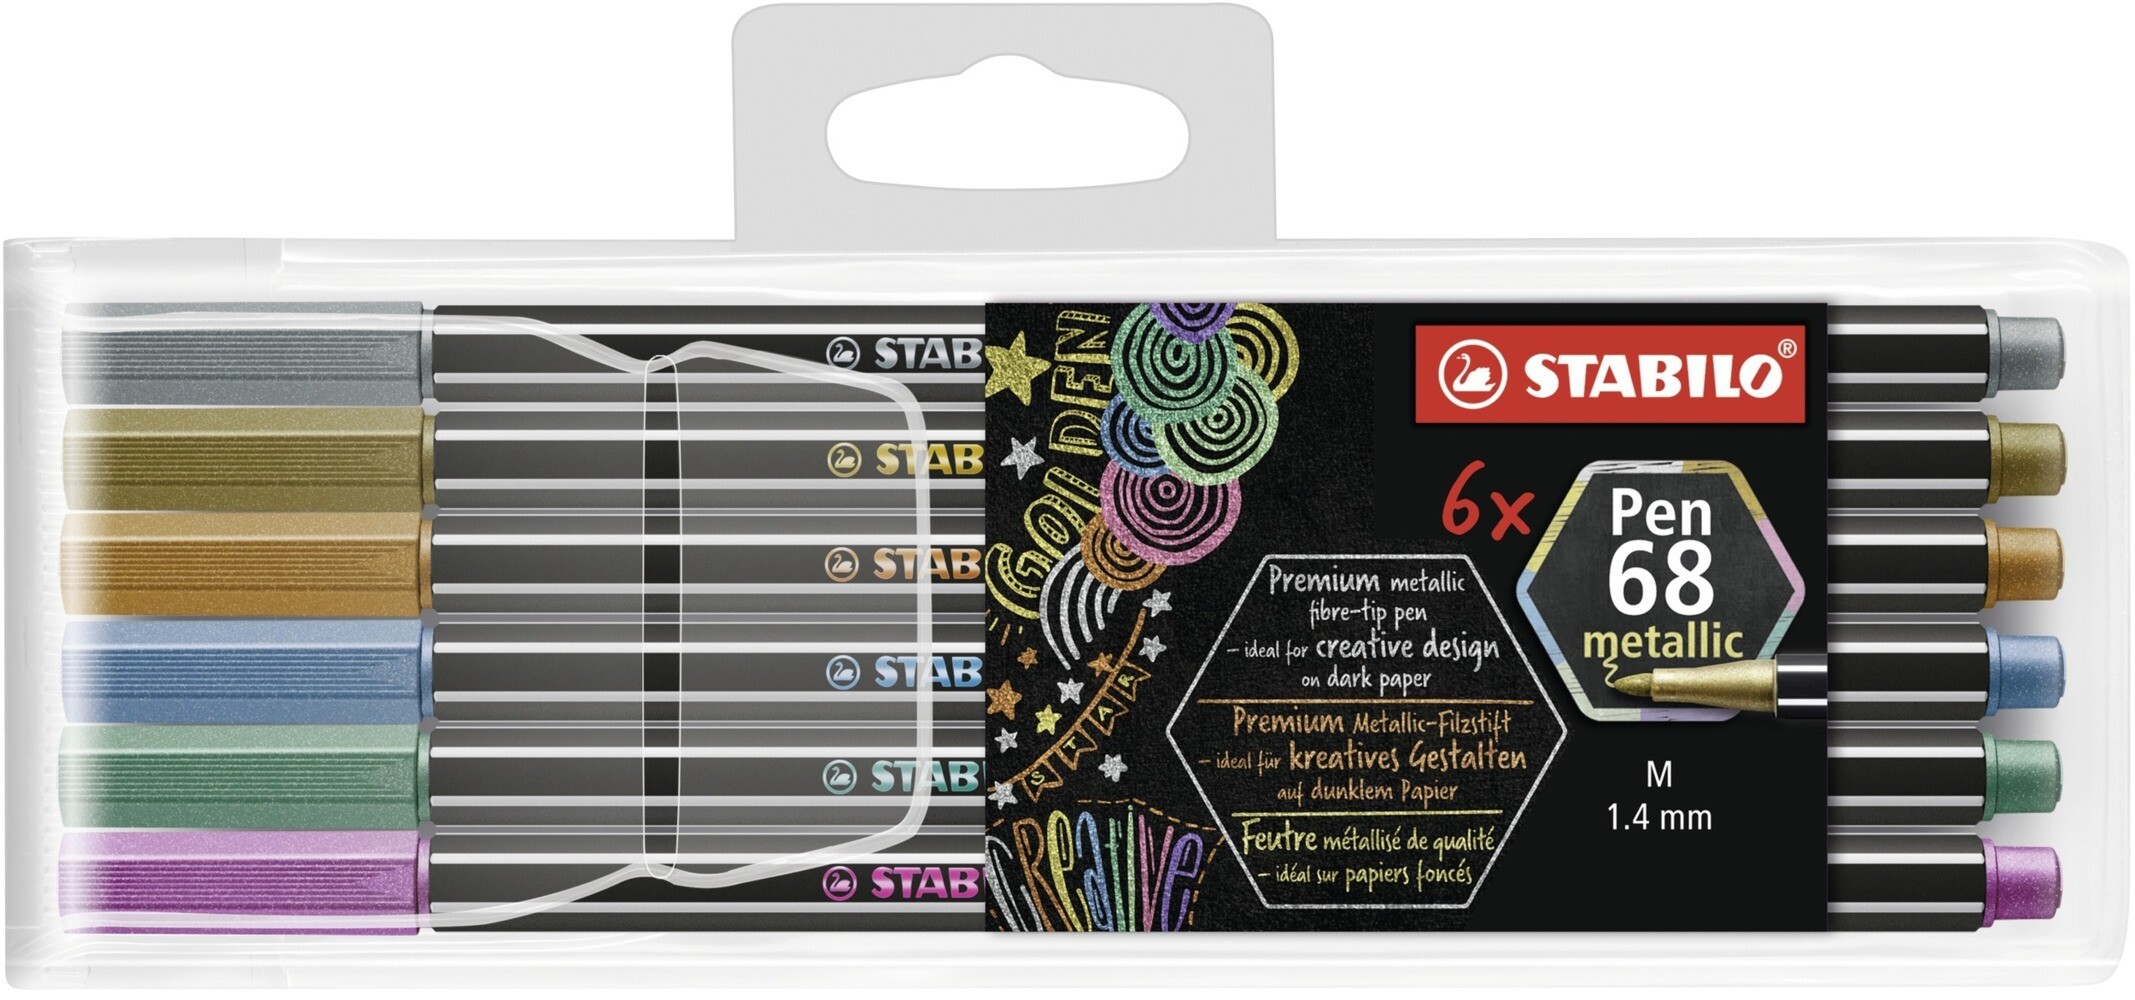 Premium Metallic-Filzstift - STABILO Pen 68 metallic - 6er Pack - mit 6 verschiedenen Metallic-Farbe